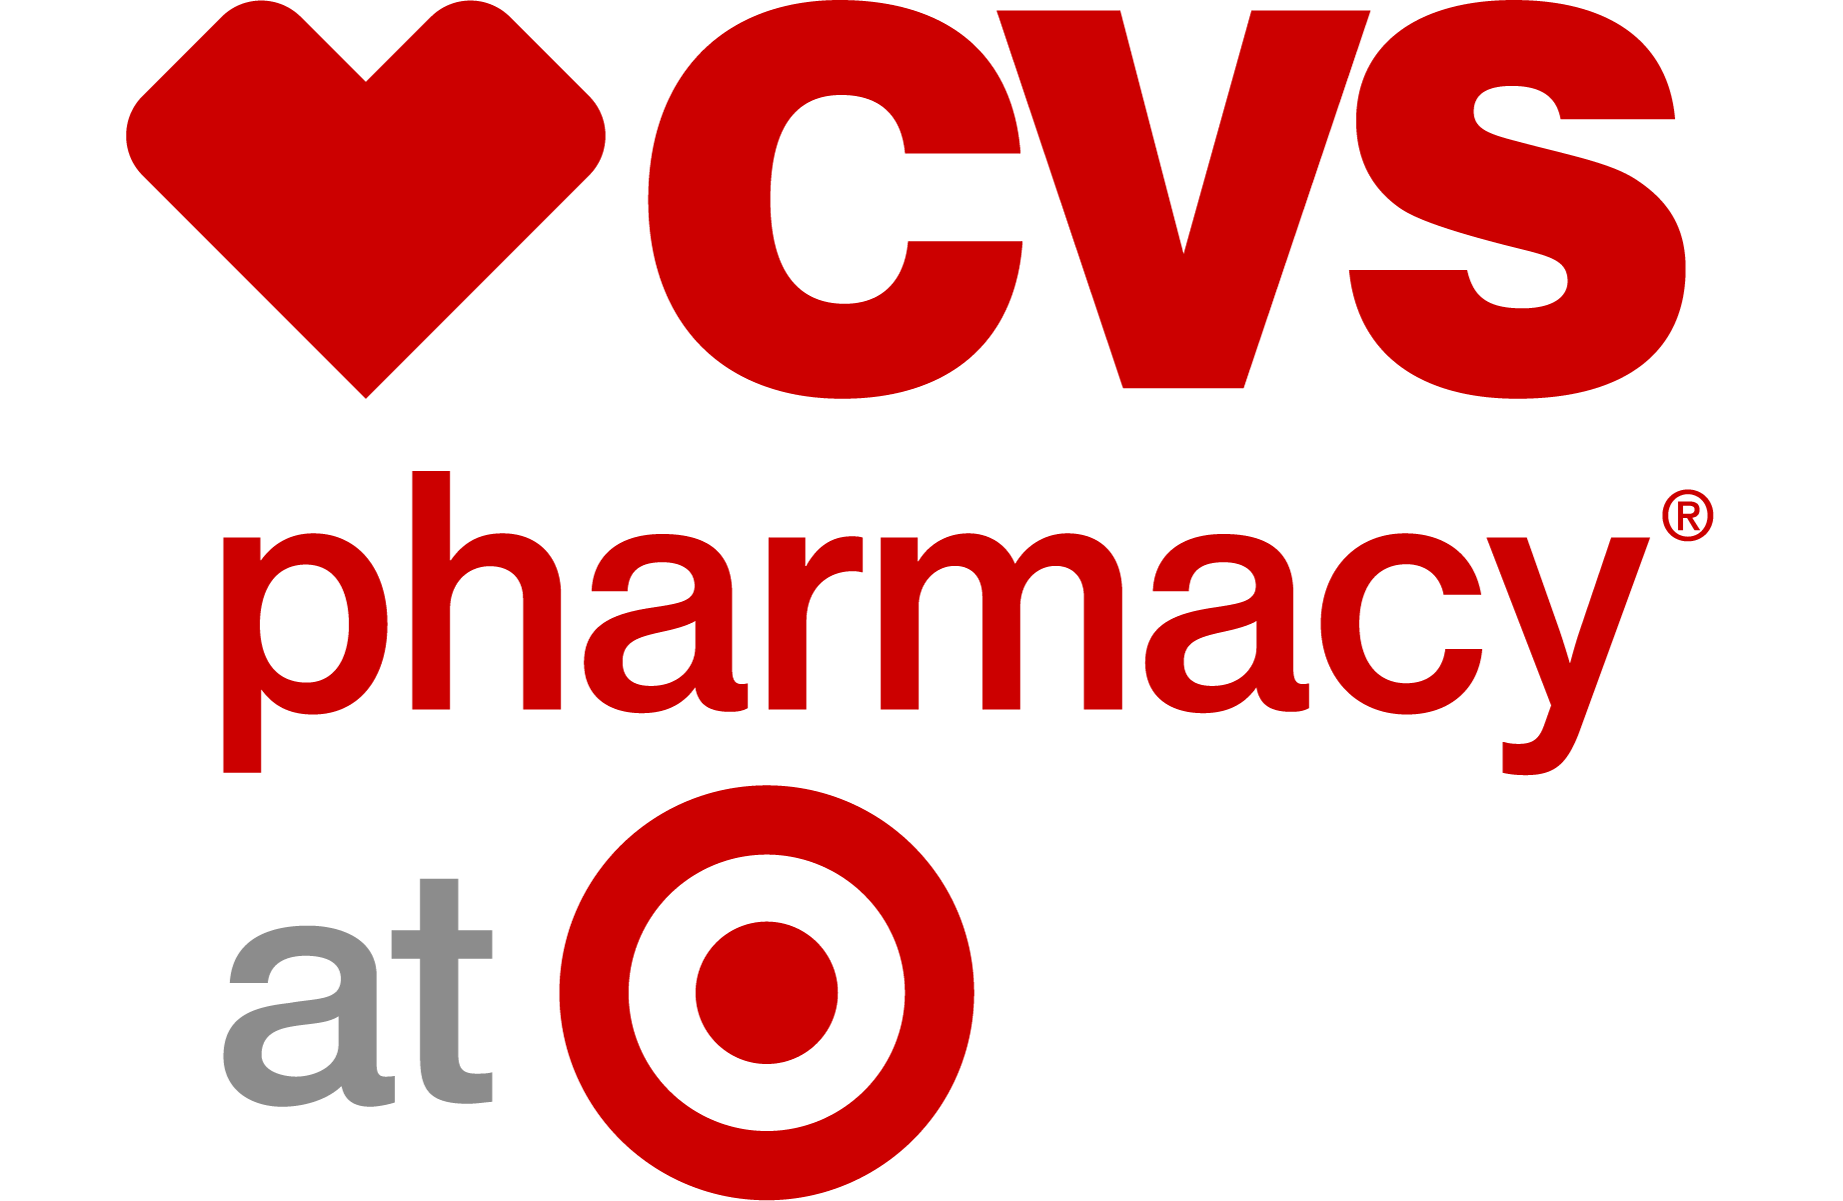 CVS Pharmacy at Target